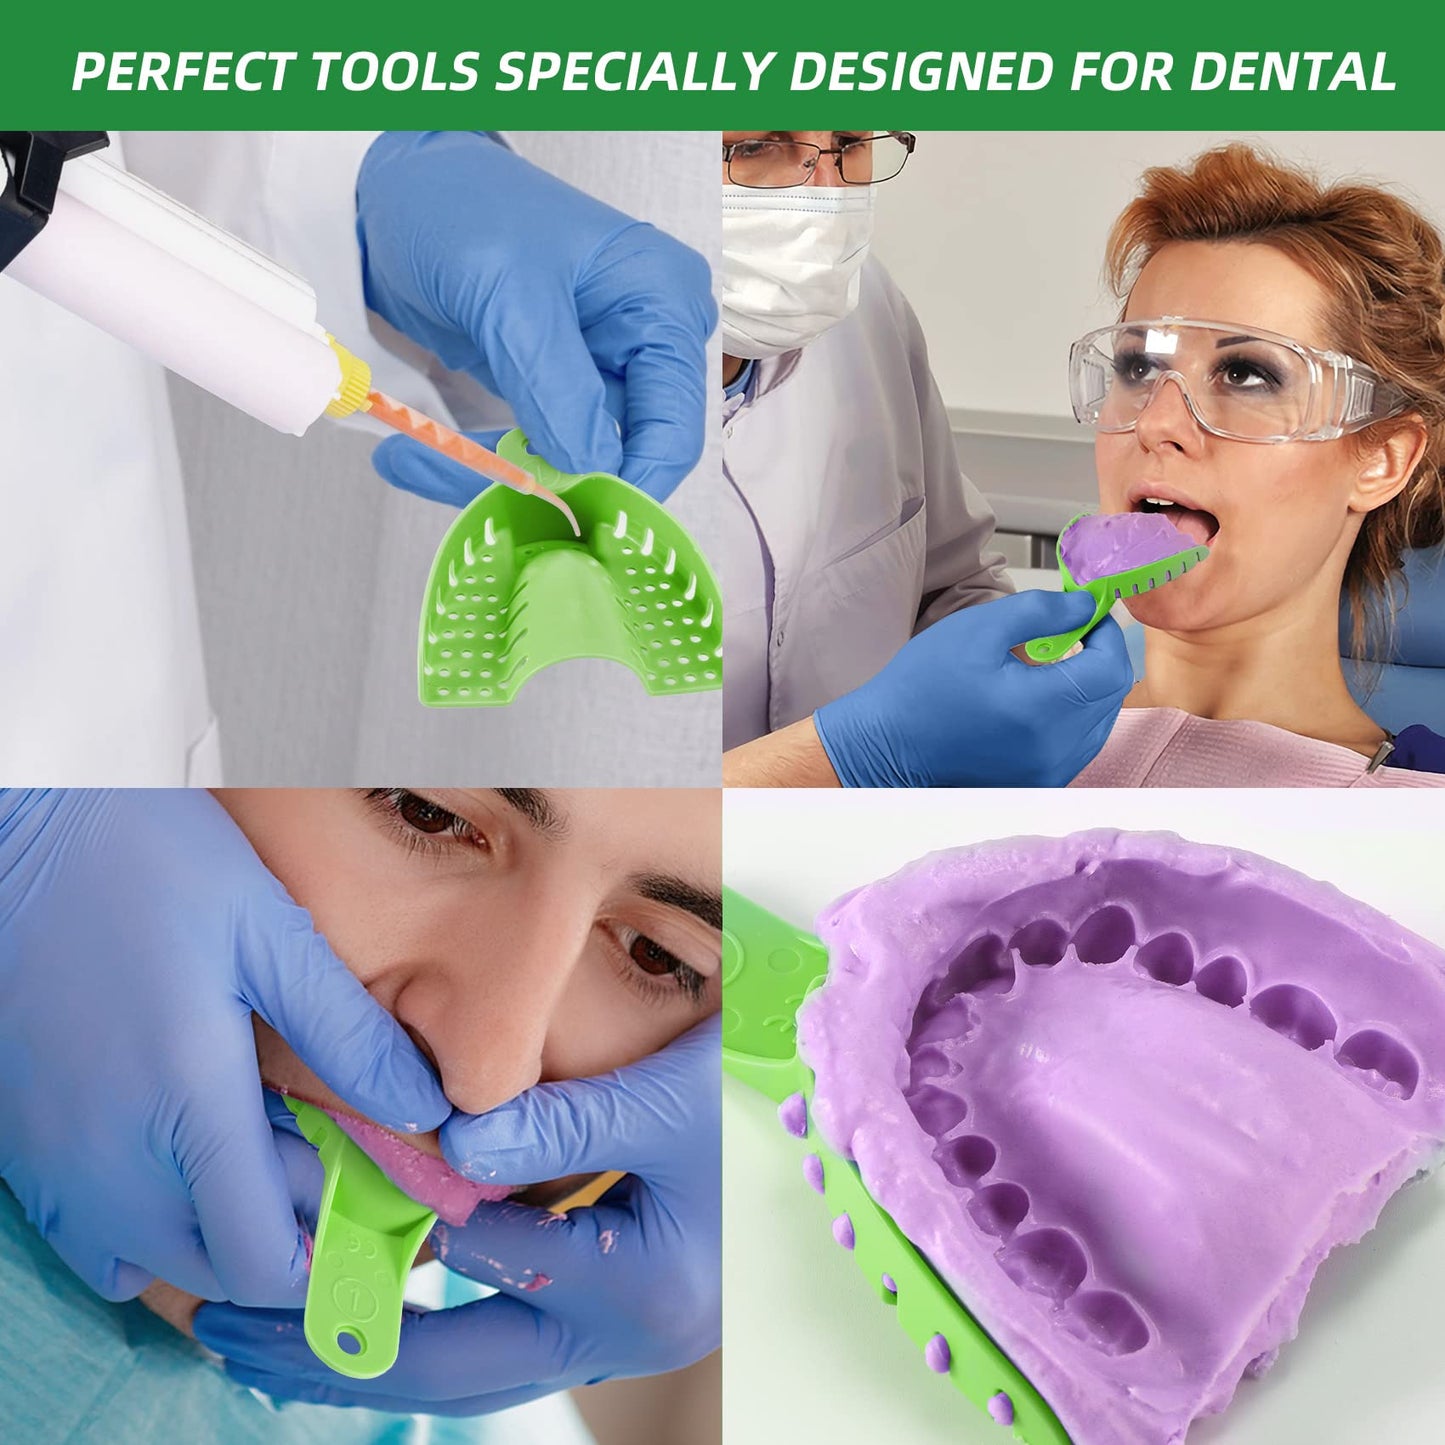 Dental Impression Trays Autoclavable 10 PCS, Perforated Impression Trays Set Plastic Teeth Holder for Dental Clinic, Lab Equipment, Dental Students